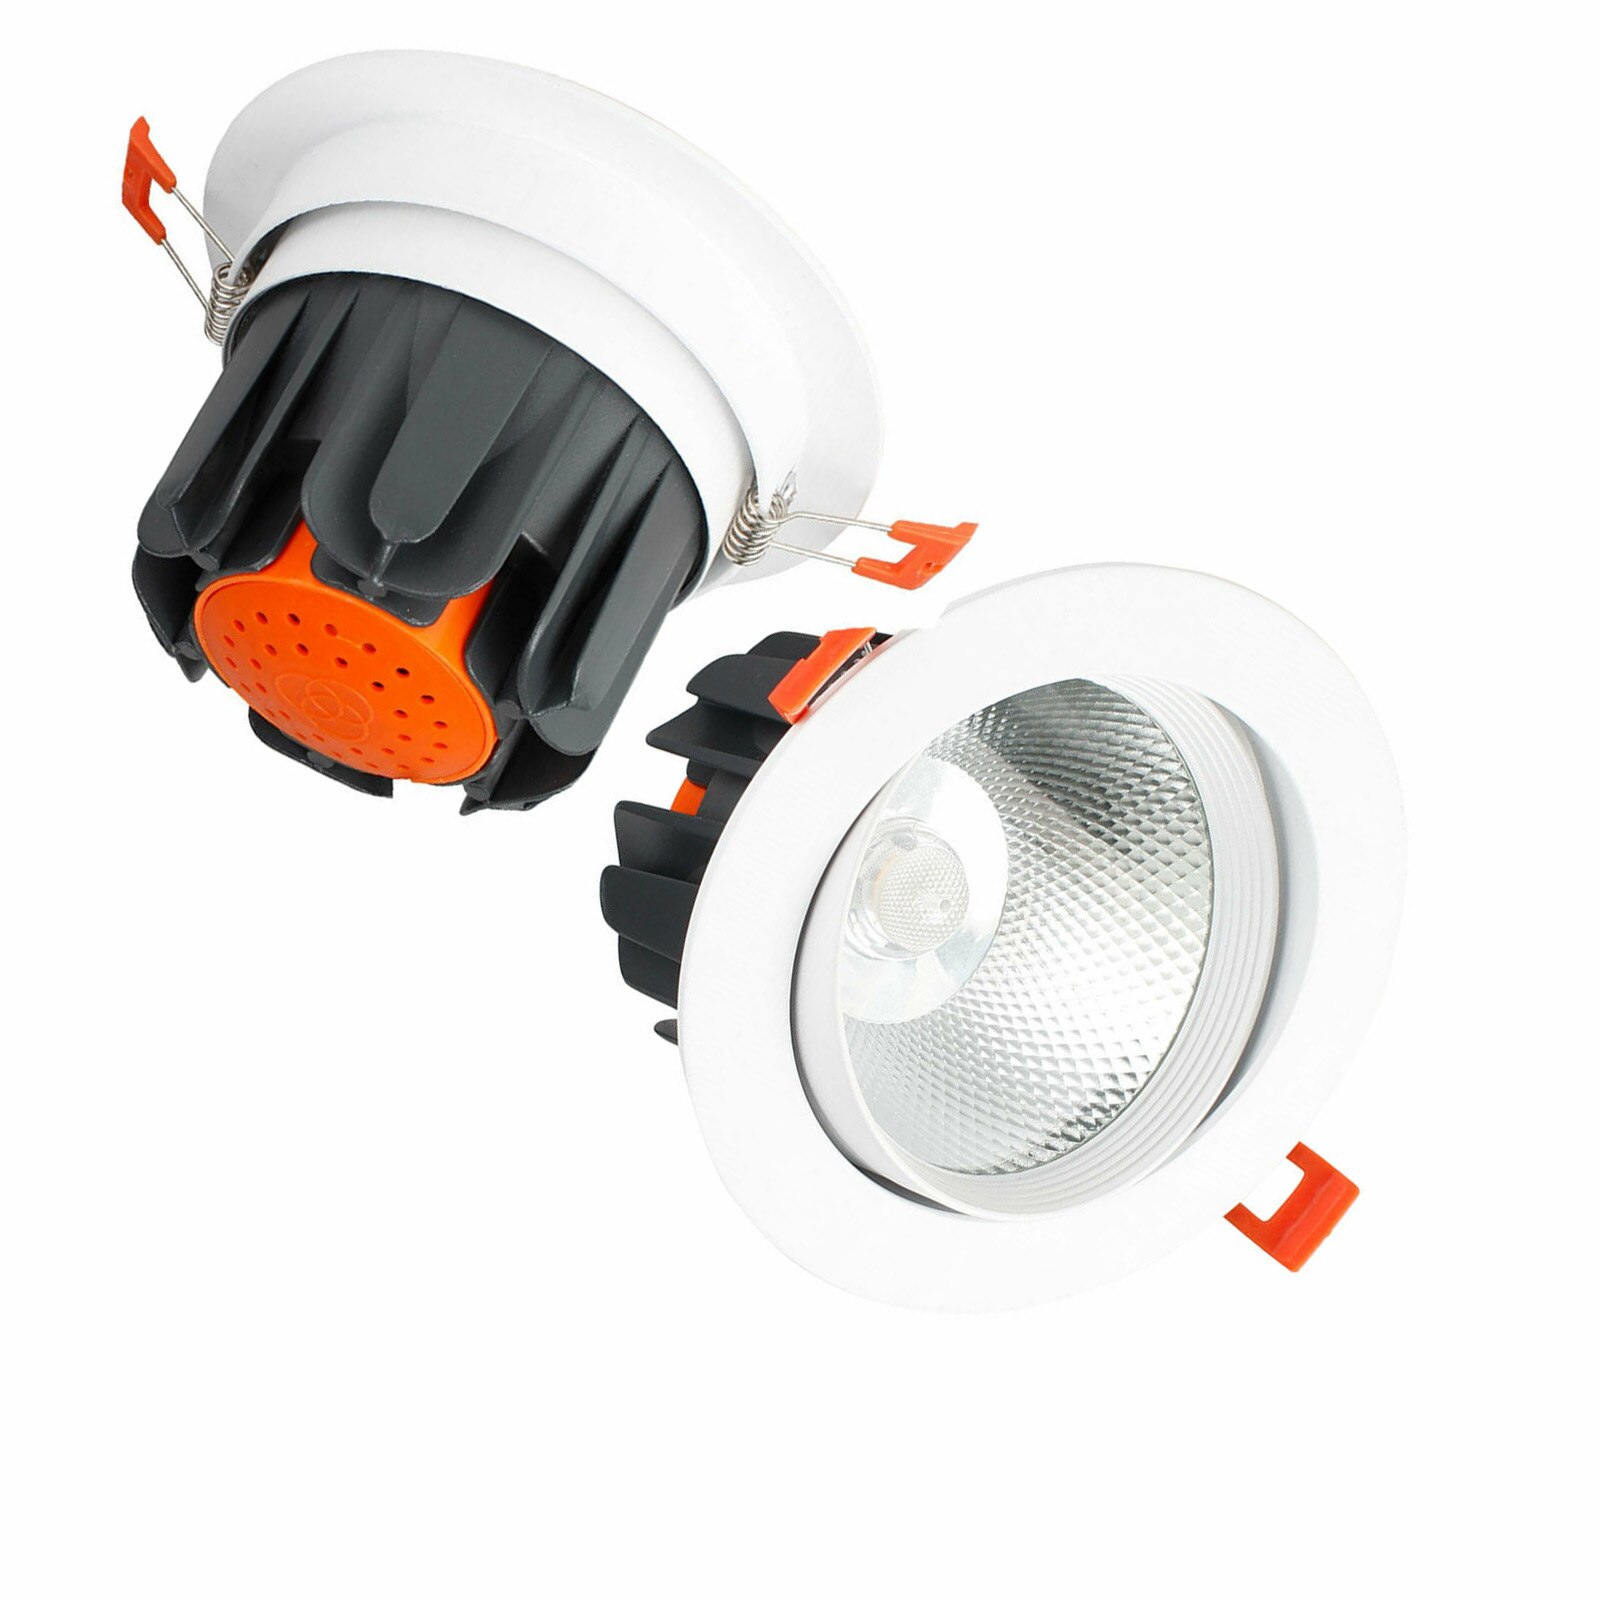 3W 7W 12W High Power LED Verzonken Plafond Lichtpunt Downlight Lamp + Driver Spotlight Verlichting Voor home Office Decoratie